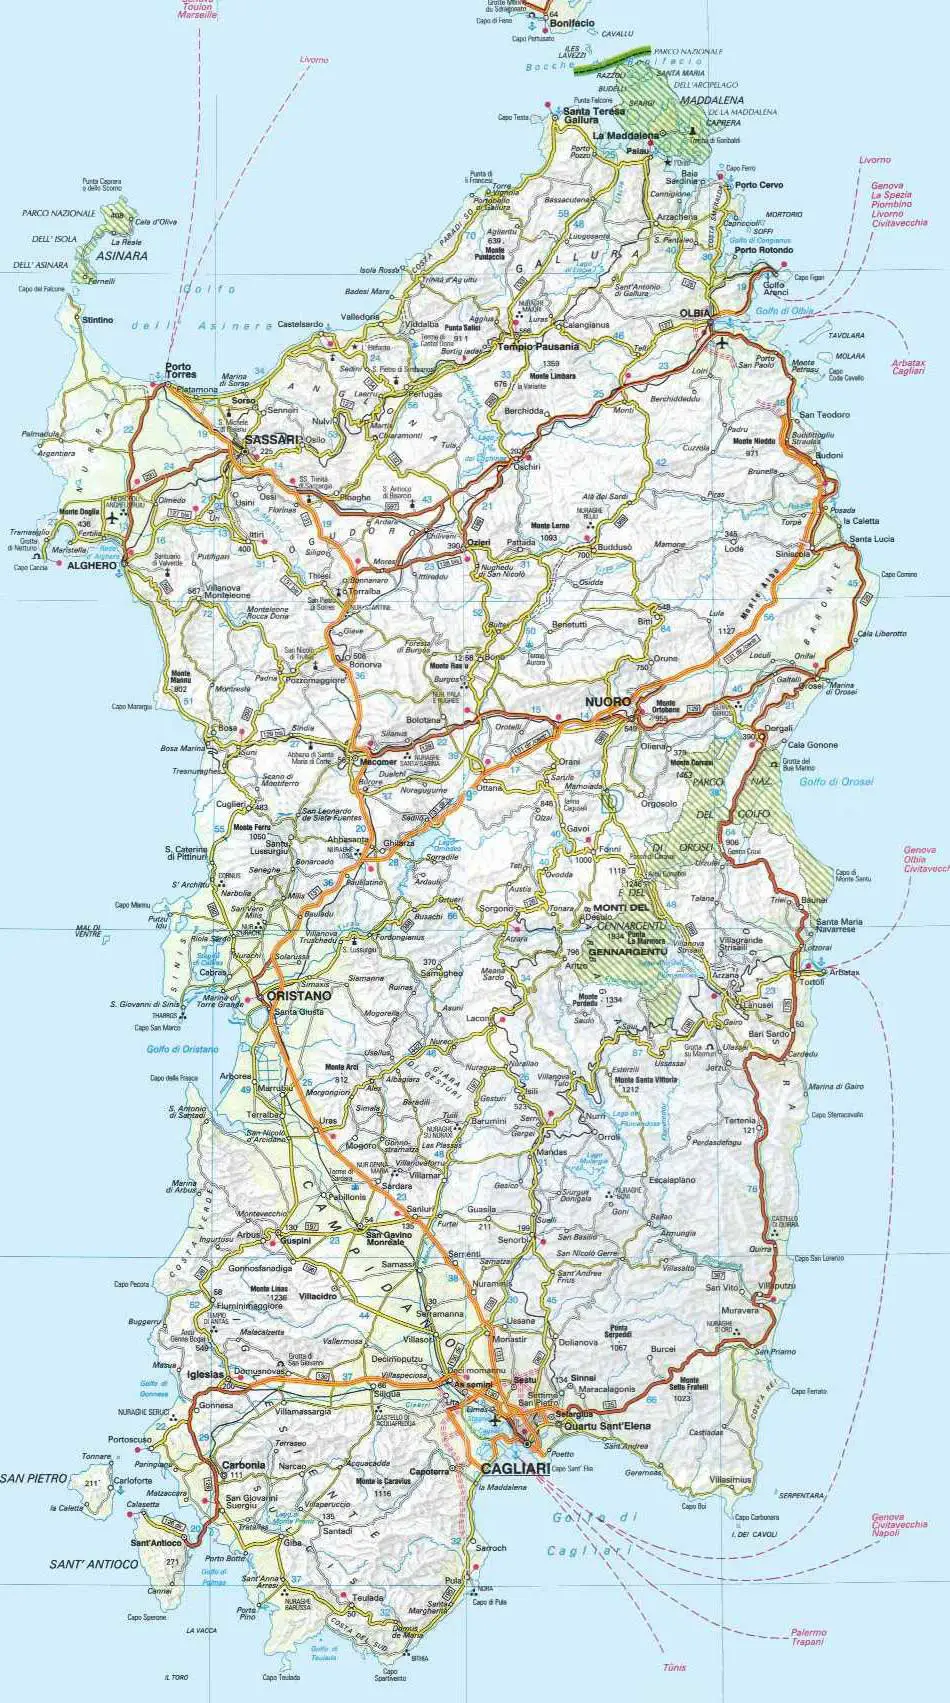 Travel Map of Sardinia - MapSof.net